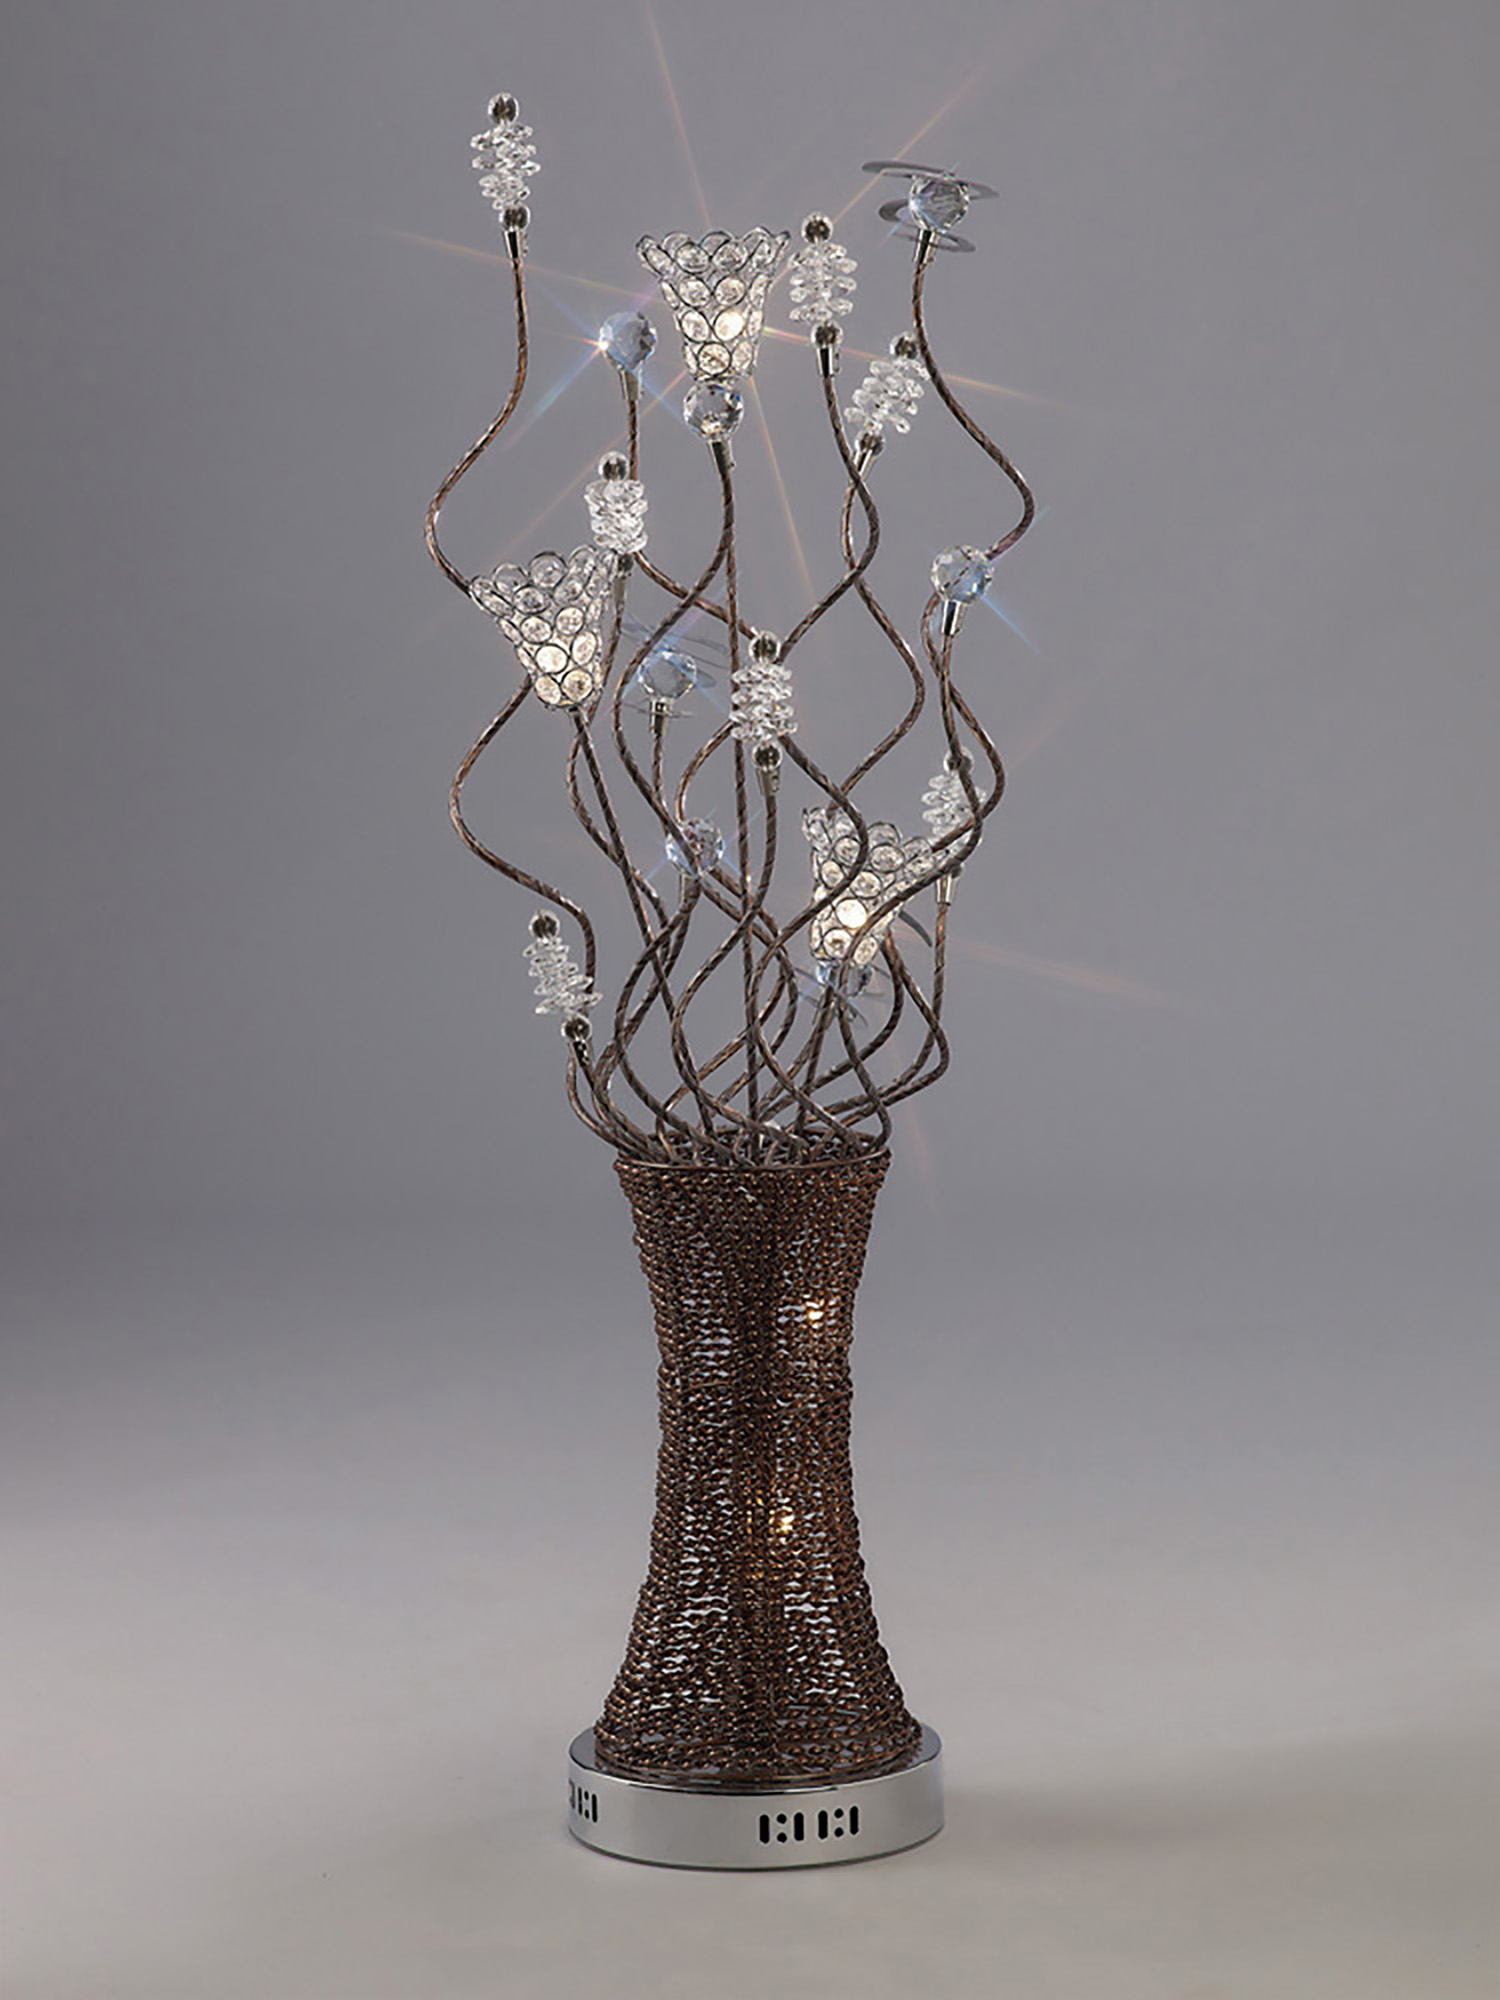 Kristal Aluminium Crystal Table Lamps Diyas Home Armed Table Lamps